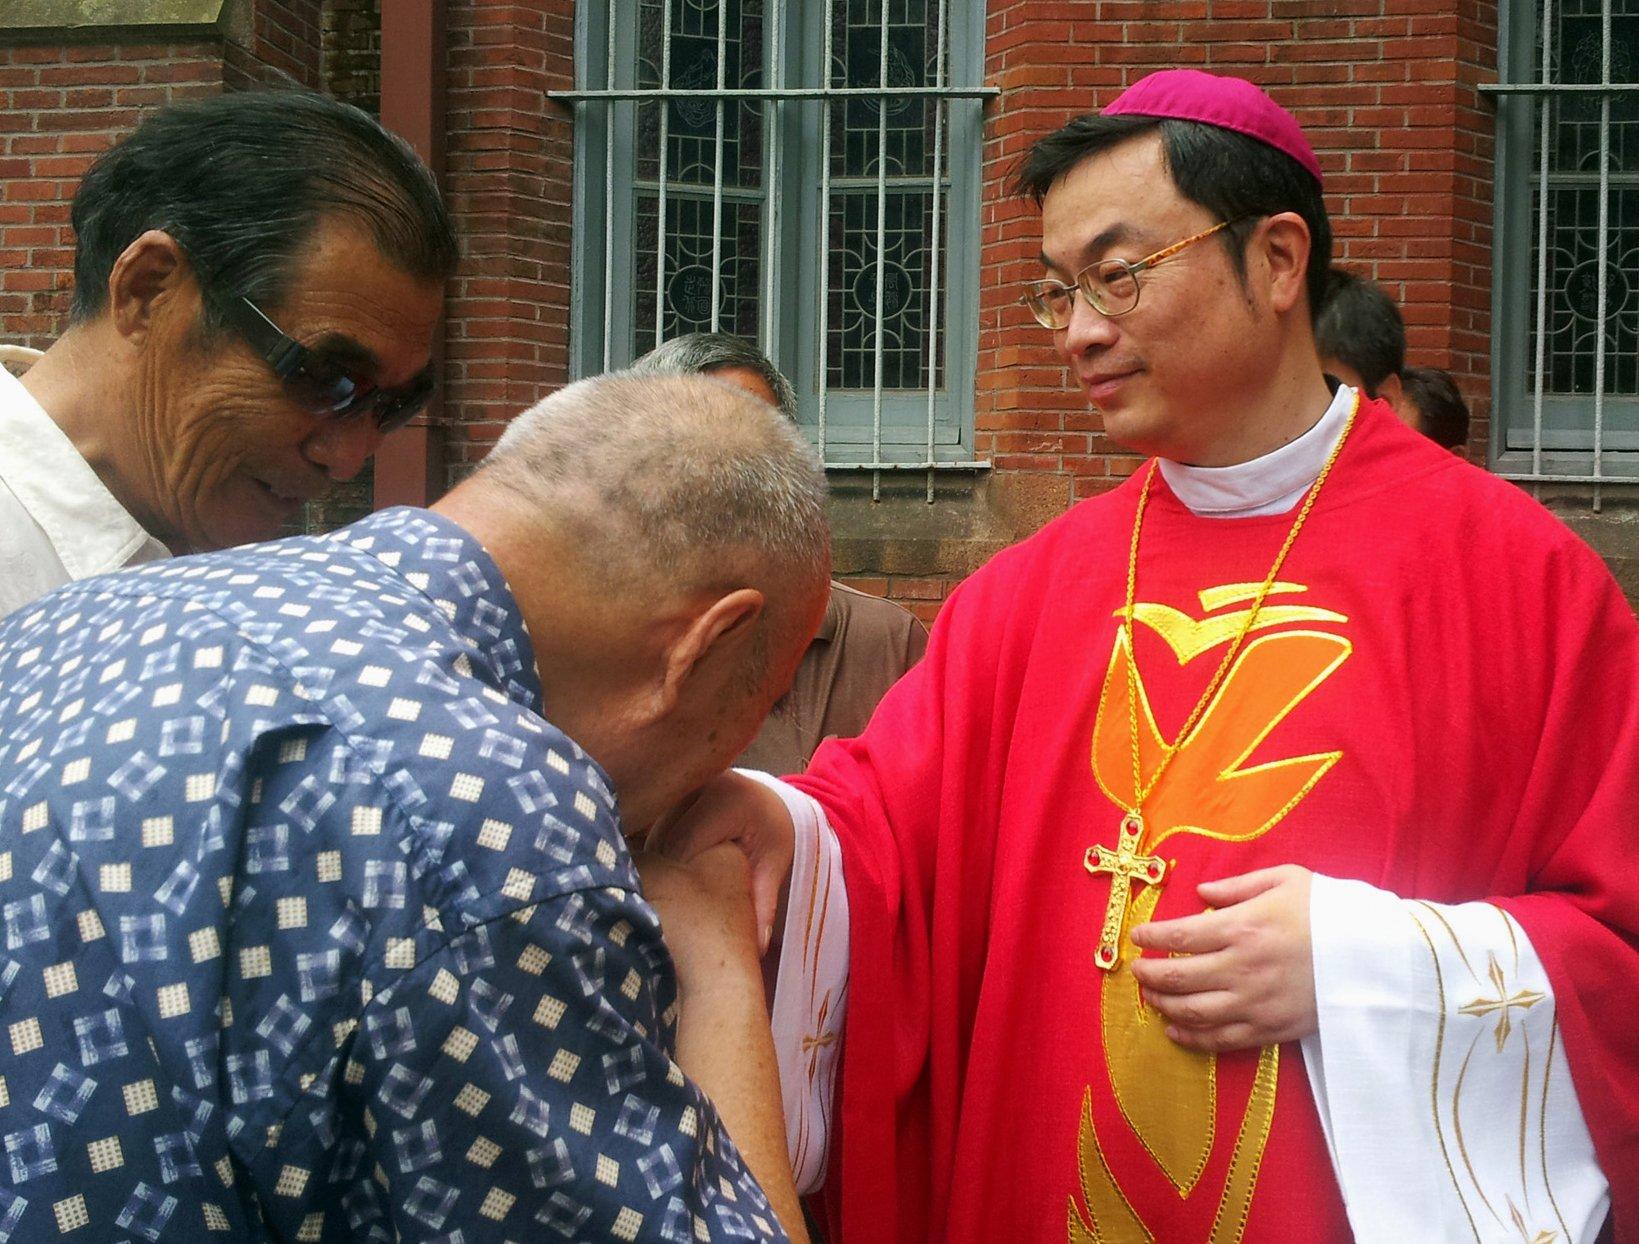 Human rights group deplores Vatican China deal